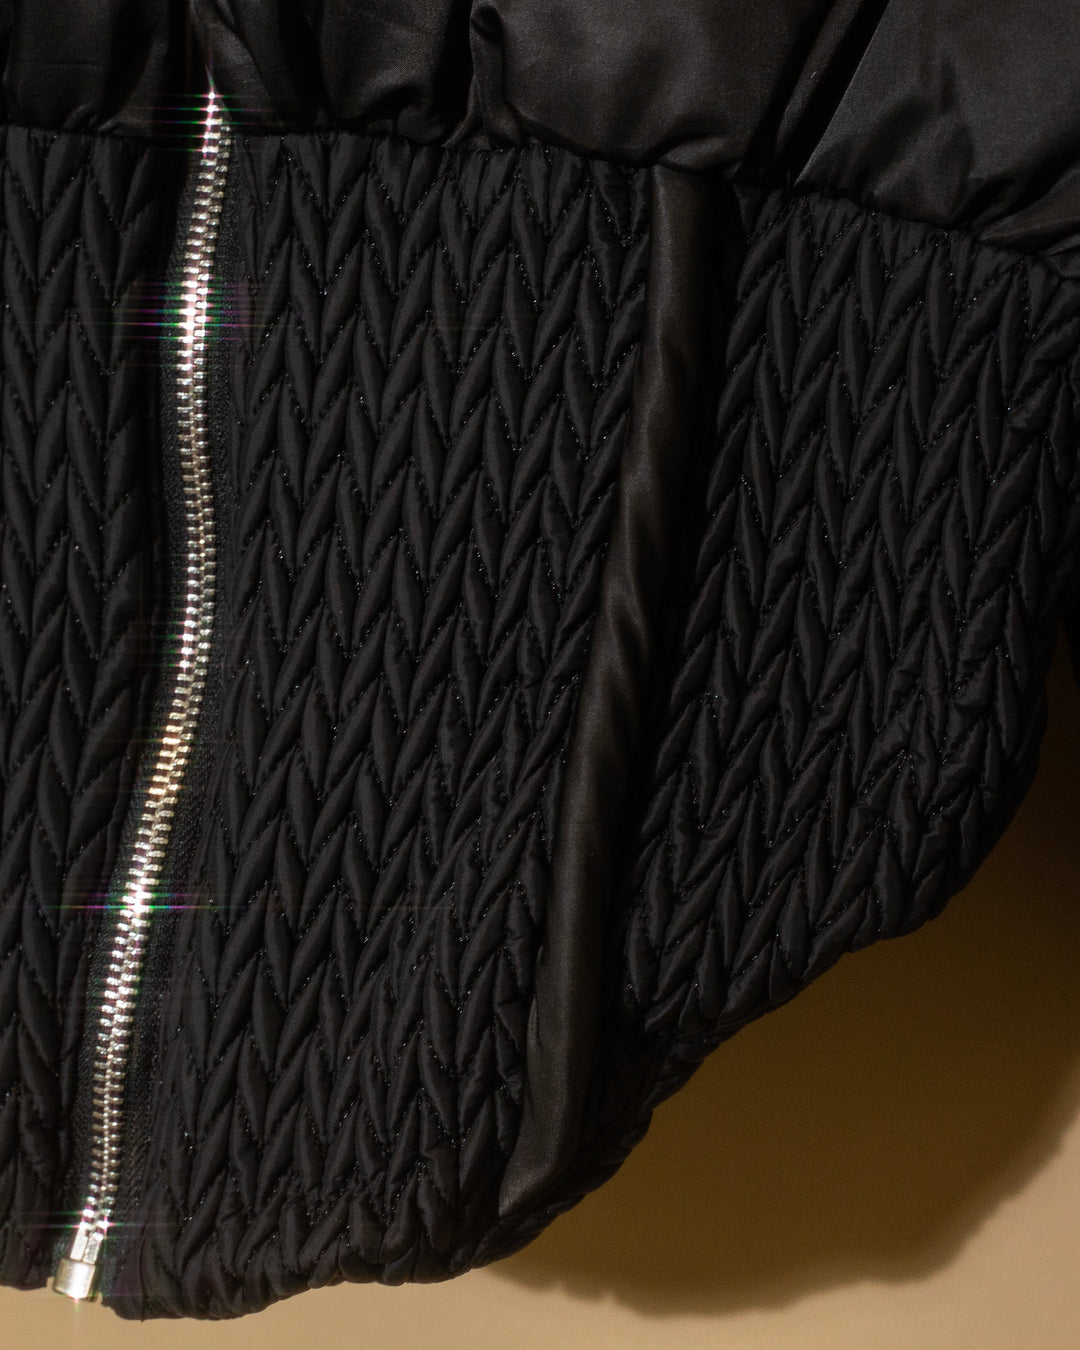 Puffer jacket/corset negra con cristales